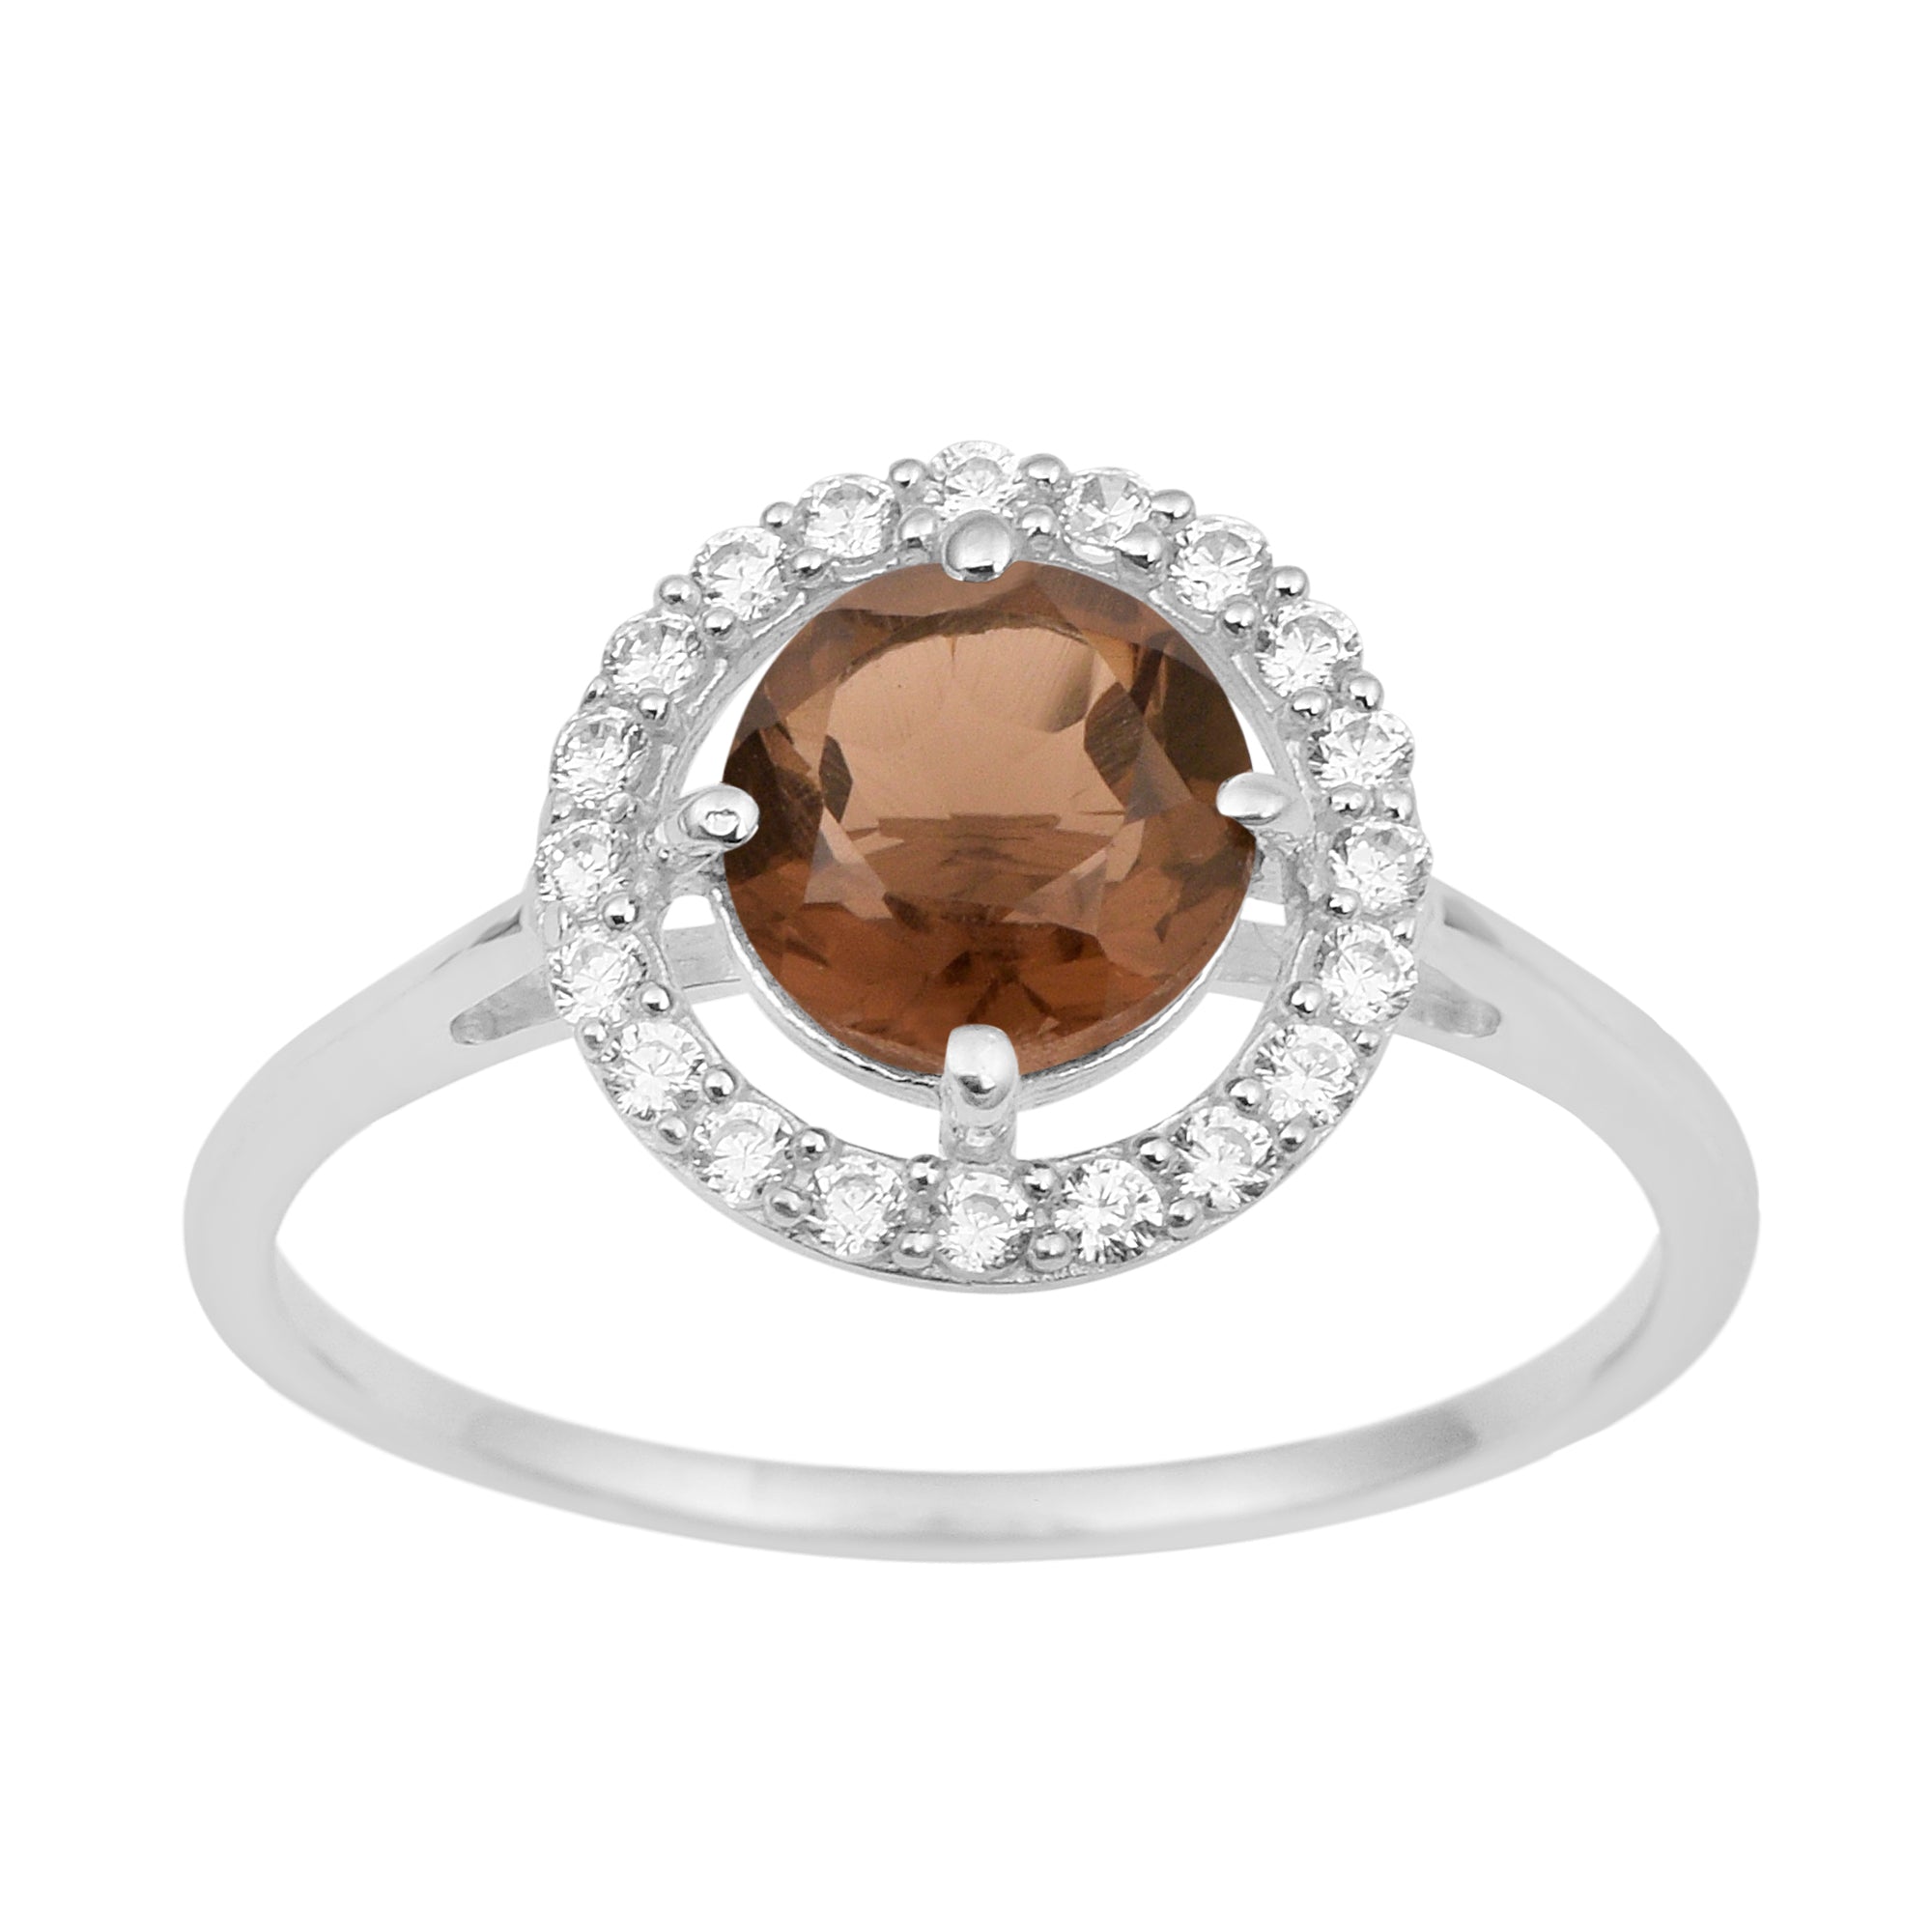 Smoky quartz engagement ring | Cushion cut smoky quartz ring